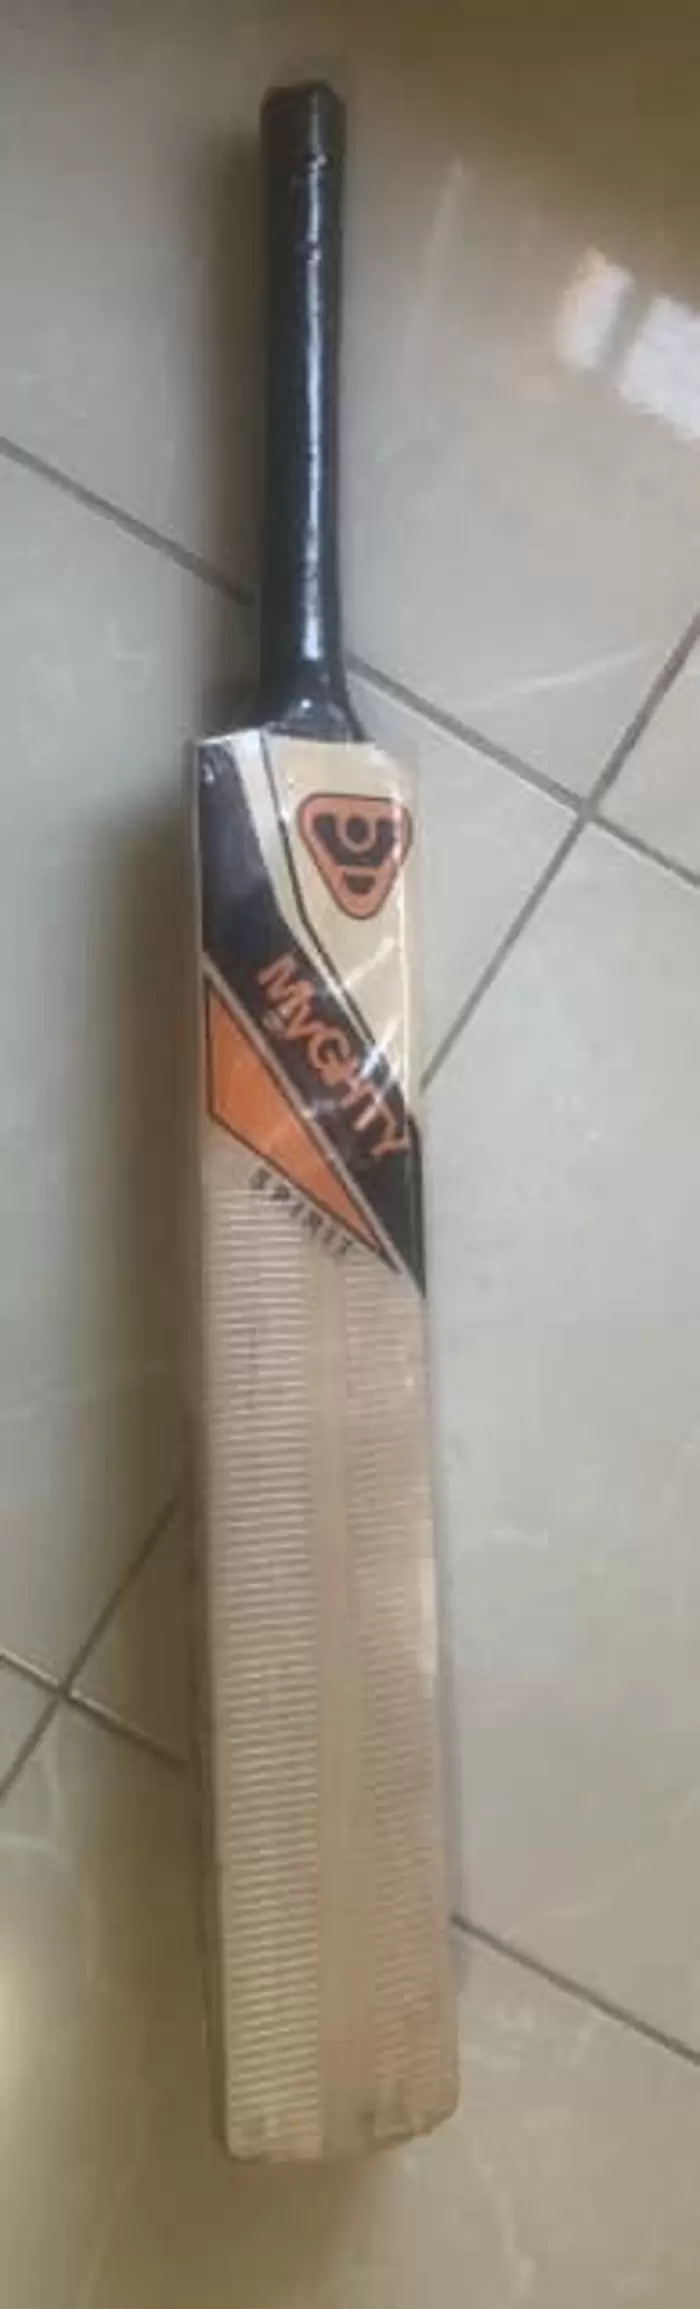 Beginner brand new cricket bat